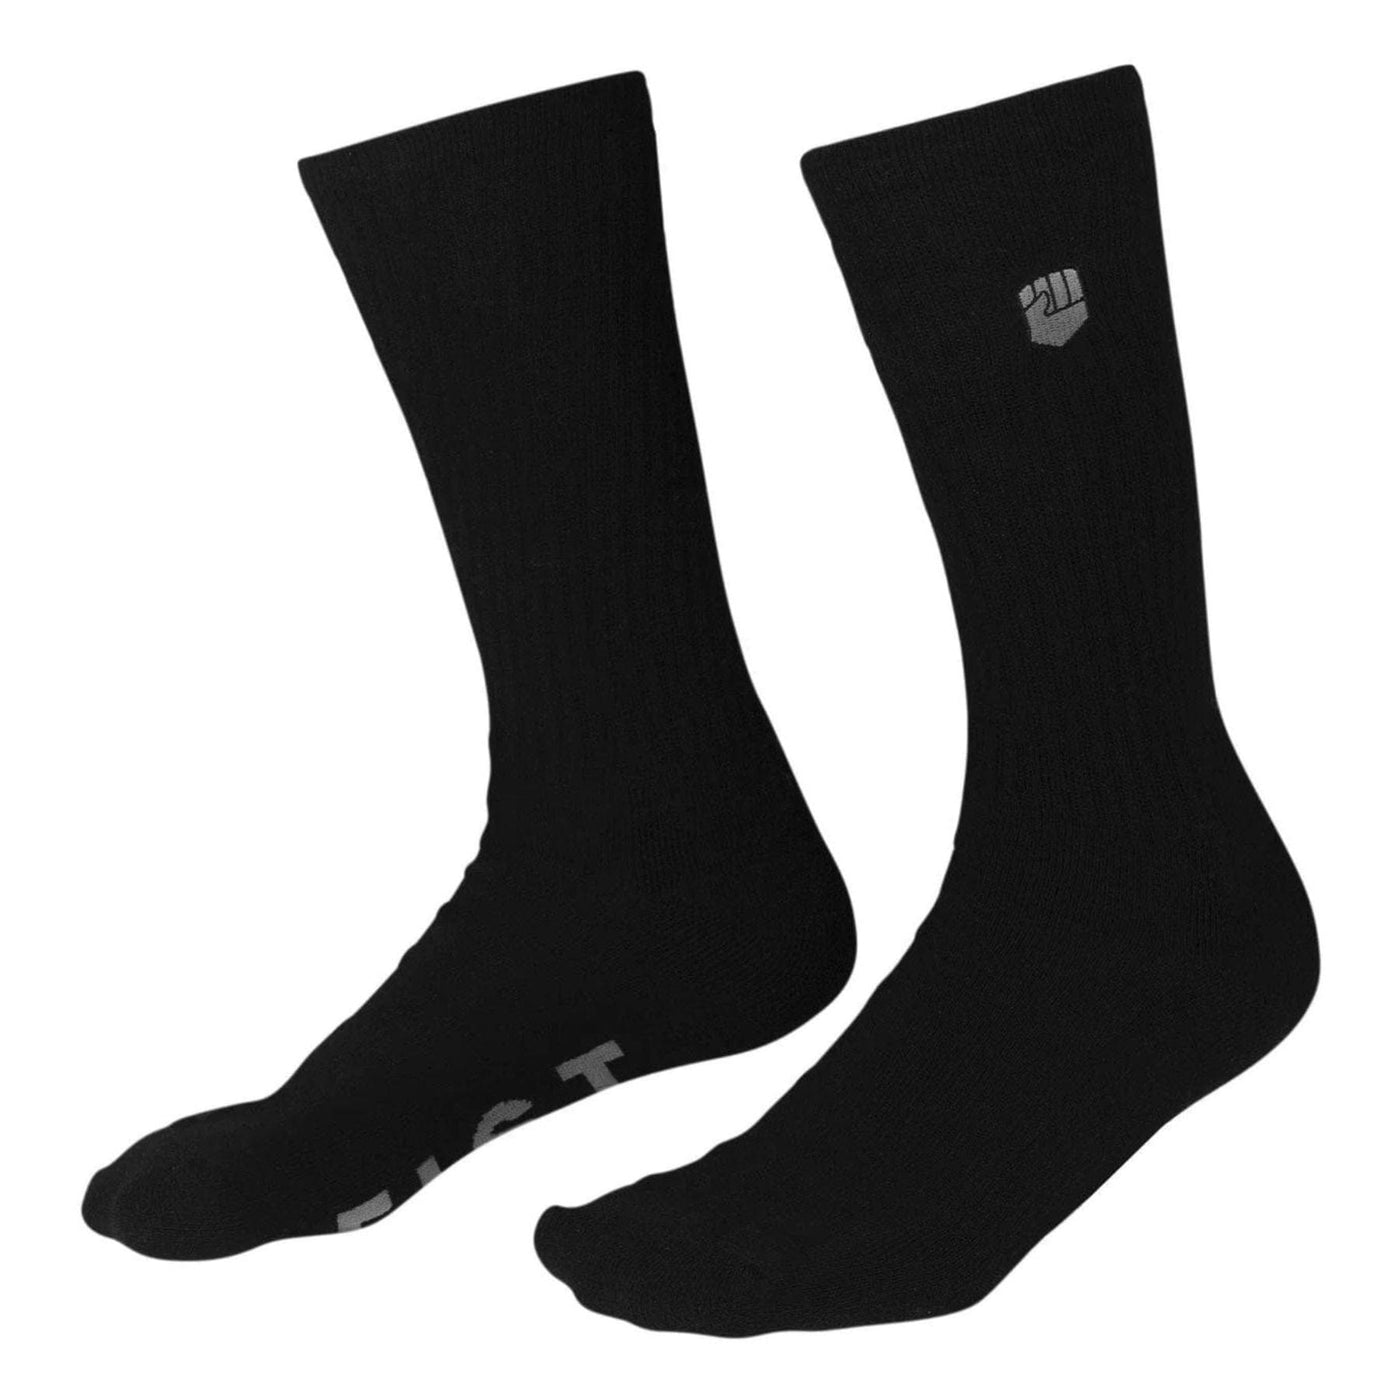 FIST Crew Socks - Black 8Lines Shop - Fast Shipping